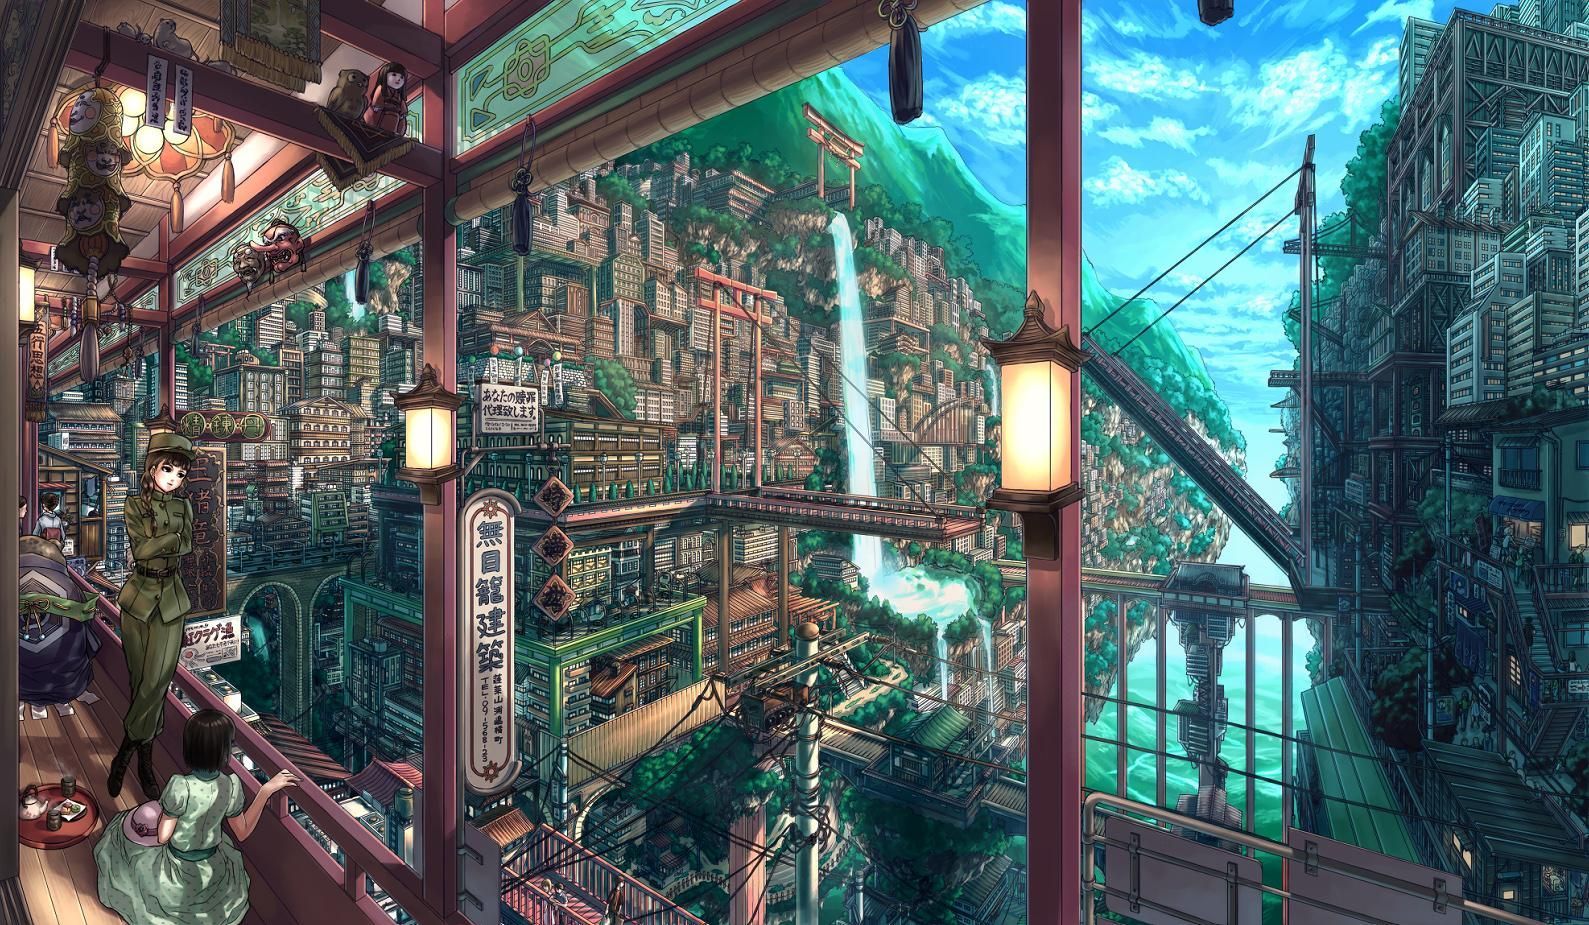 Beautiful Anime Wallpaper. Anime scenery wallpaper, Anime scenery, Anime city